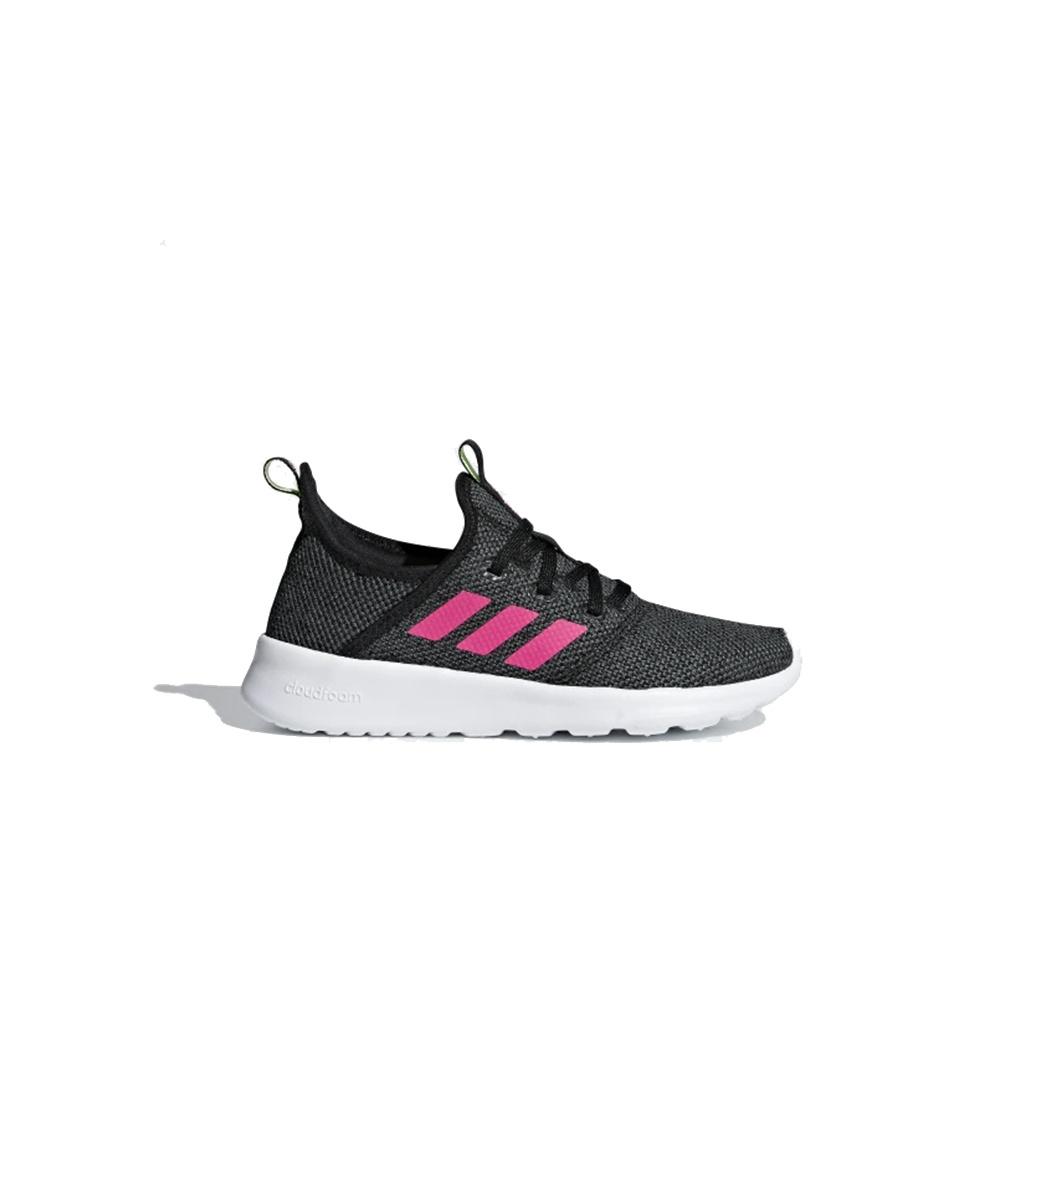 adidas cloudfoam pink and black cheap 